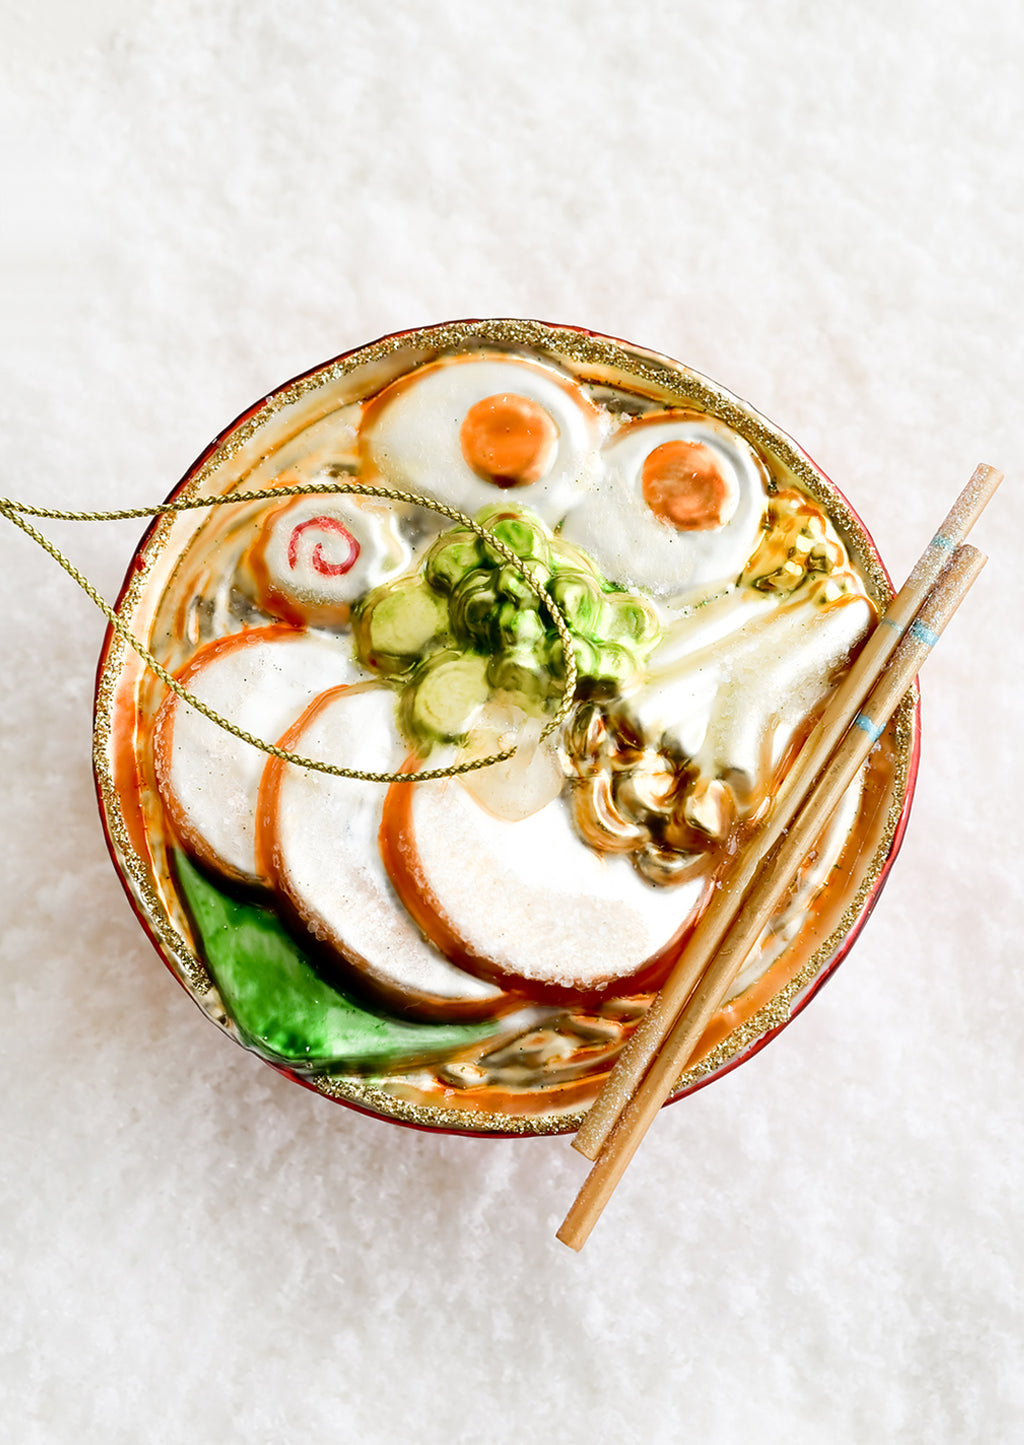 1: A decorative glass ornament in the shape of ramen noodle bowl.